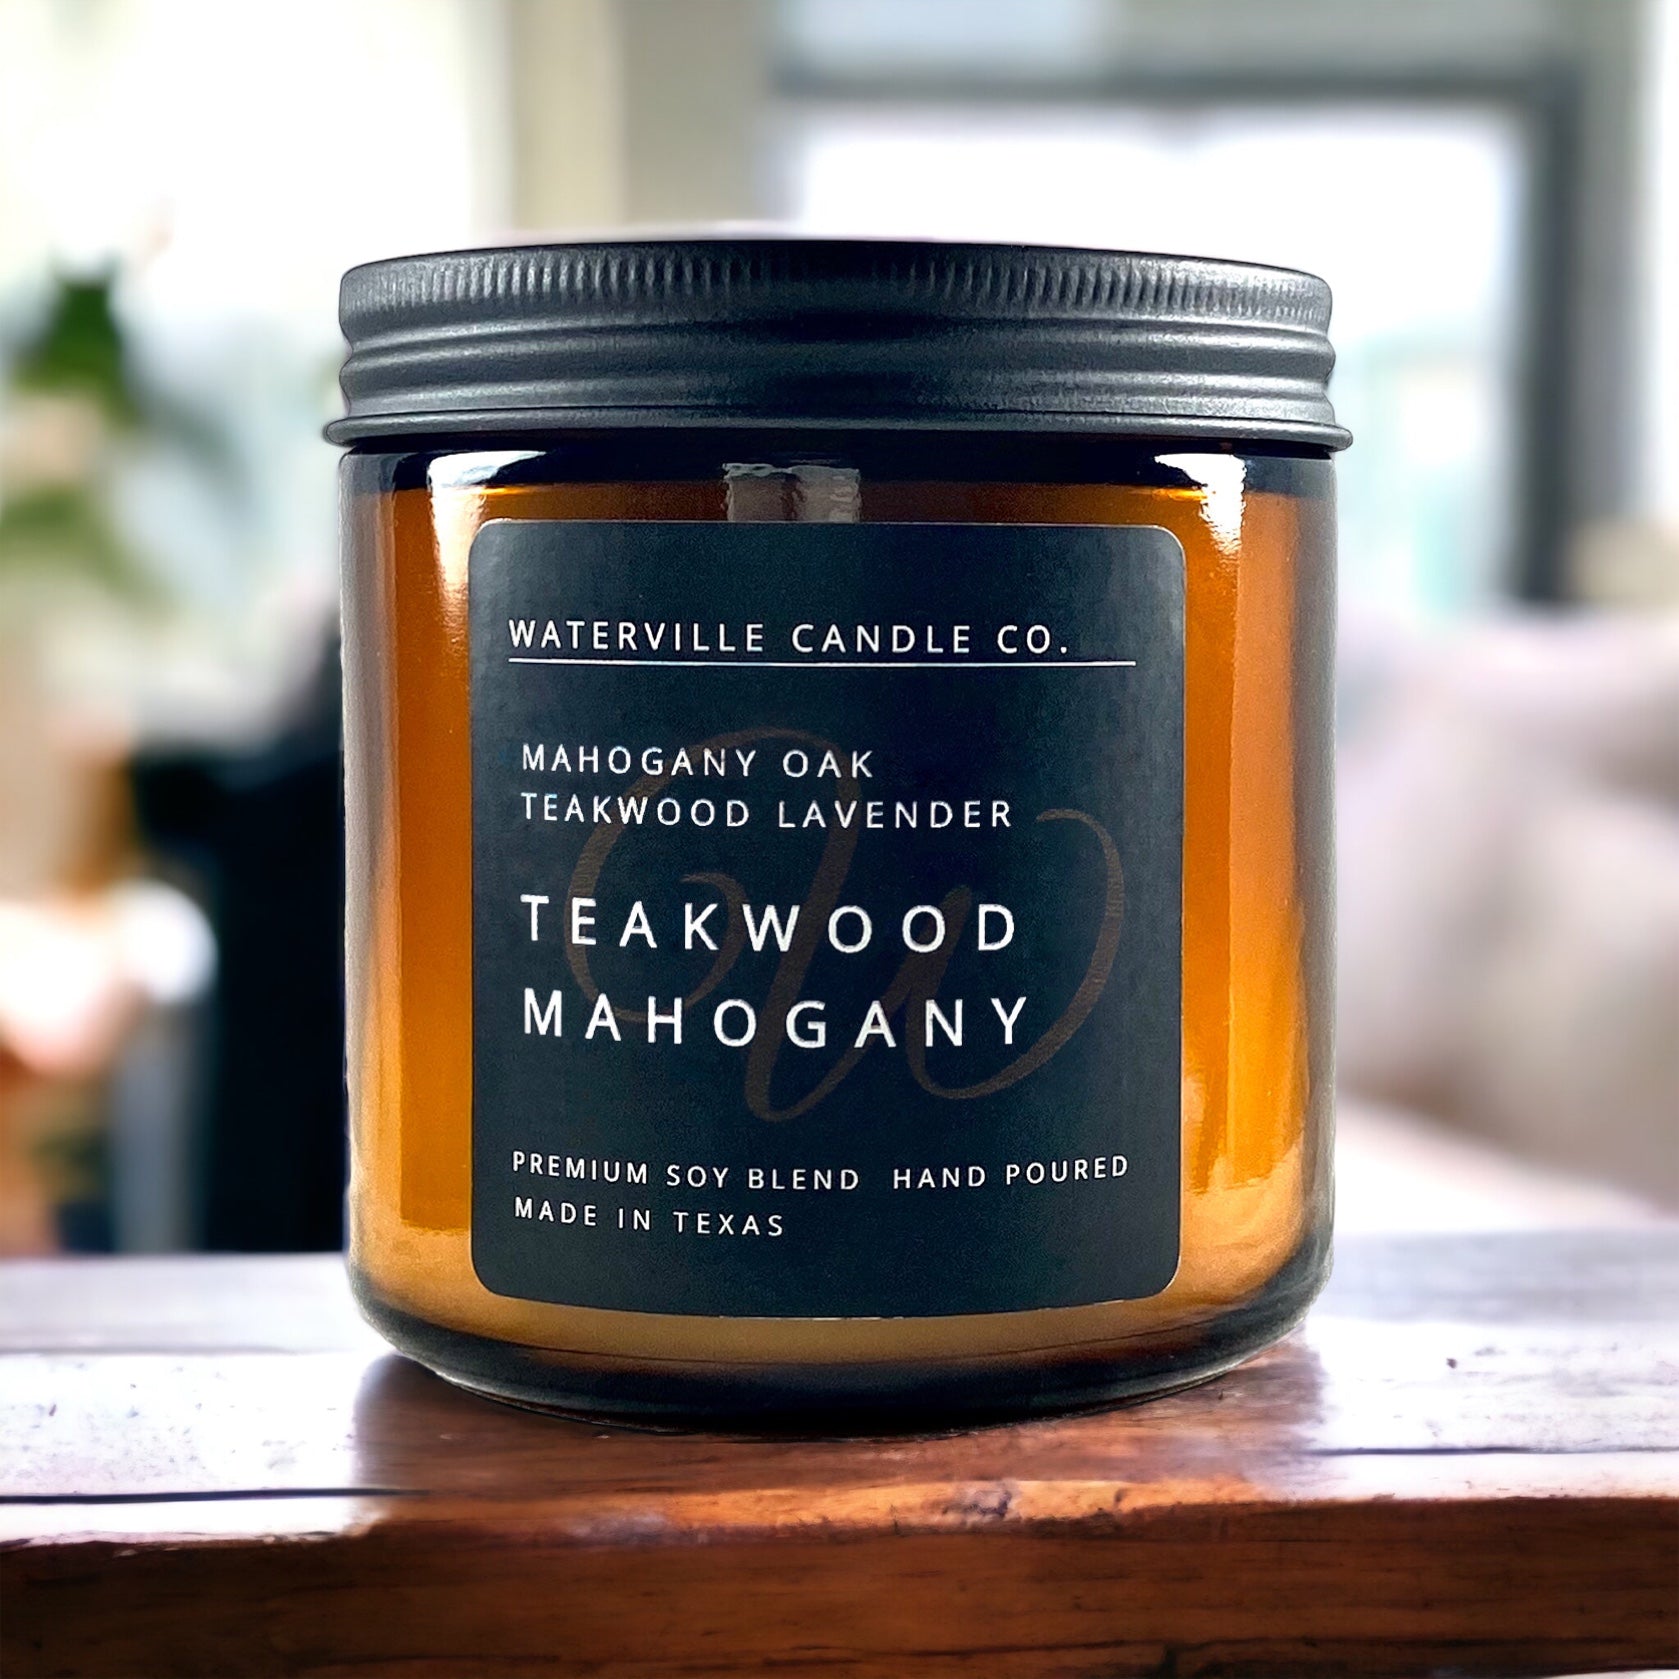 Mahogany Teakwood Candle – Sofia Store